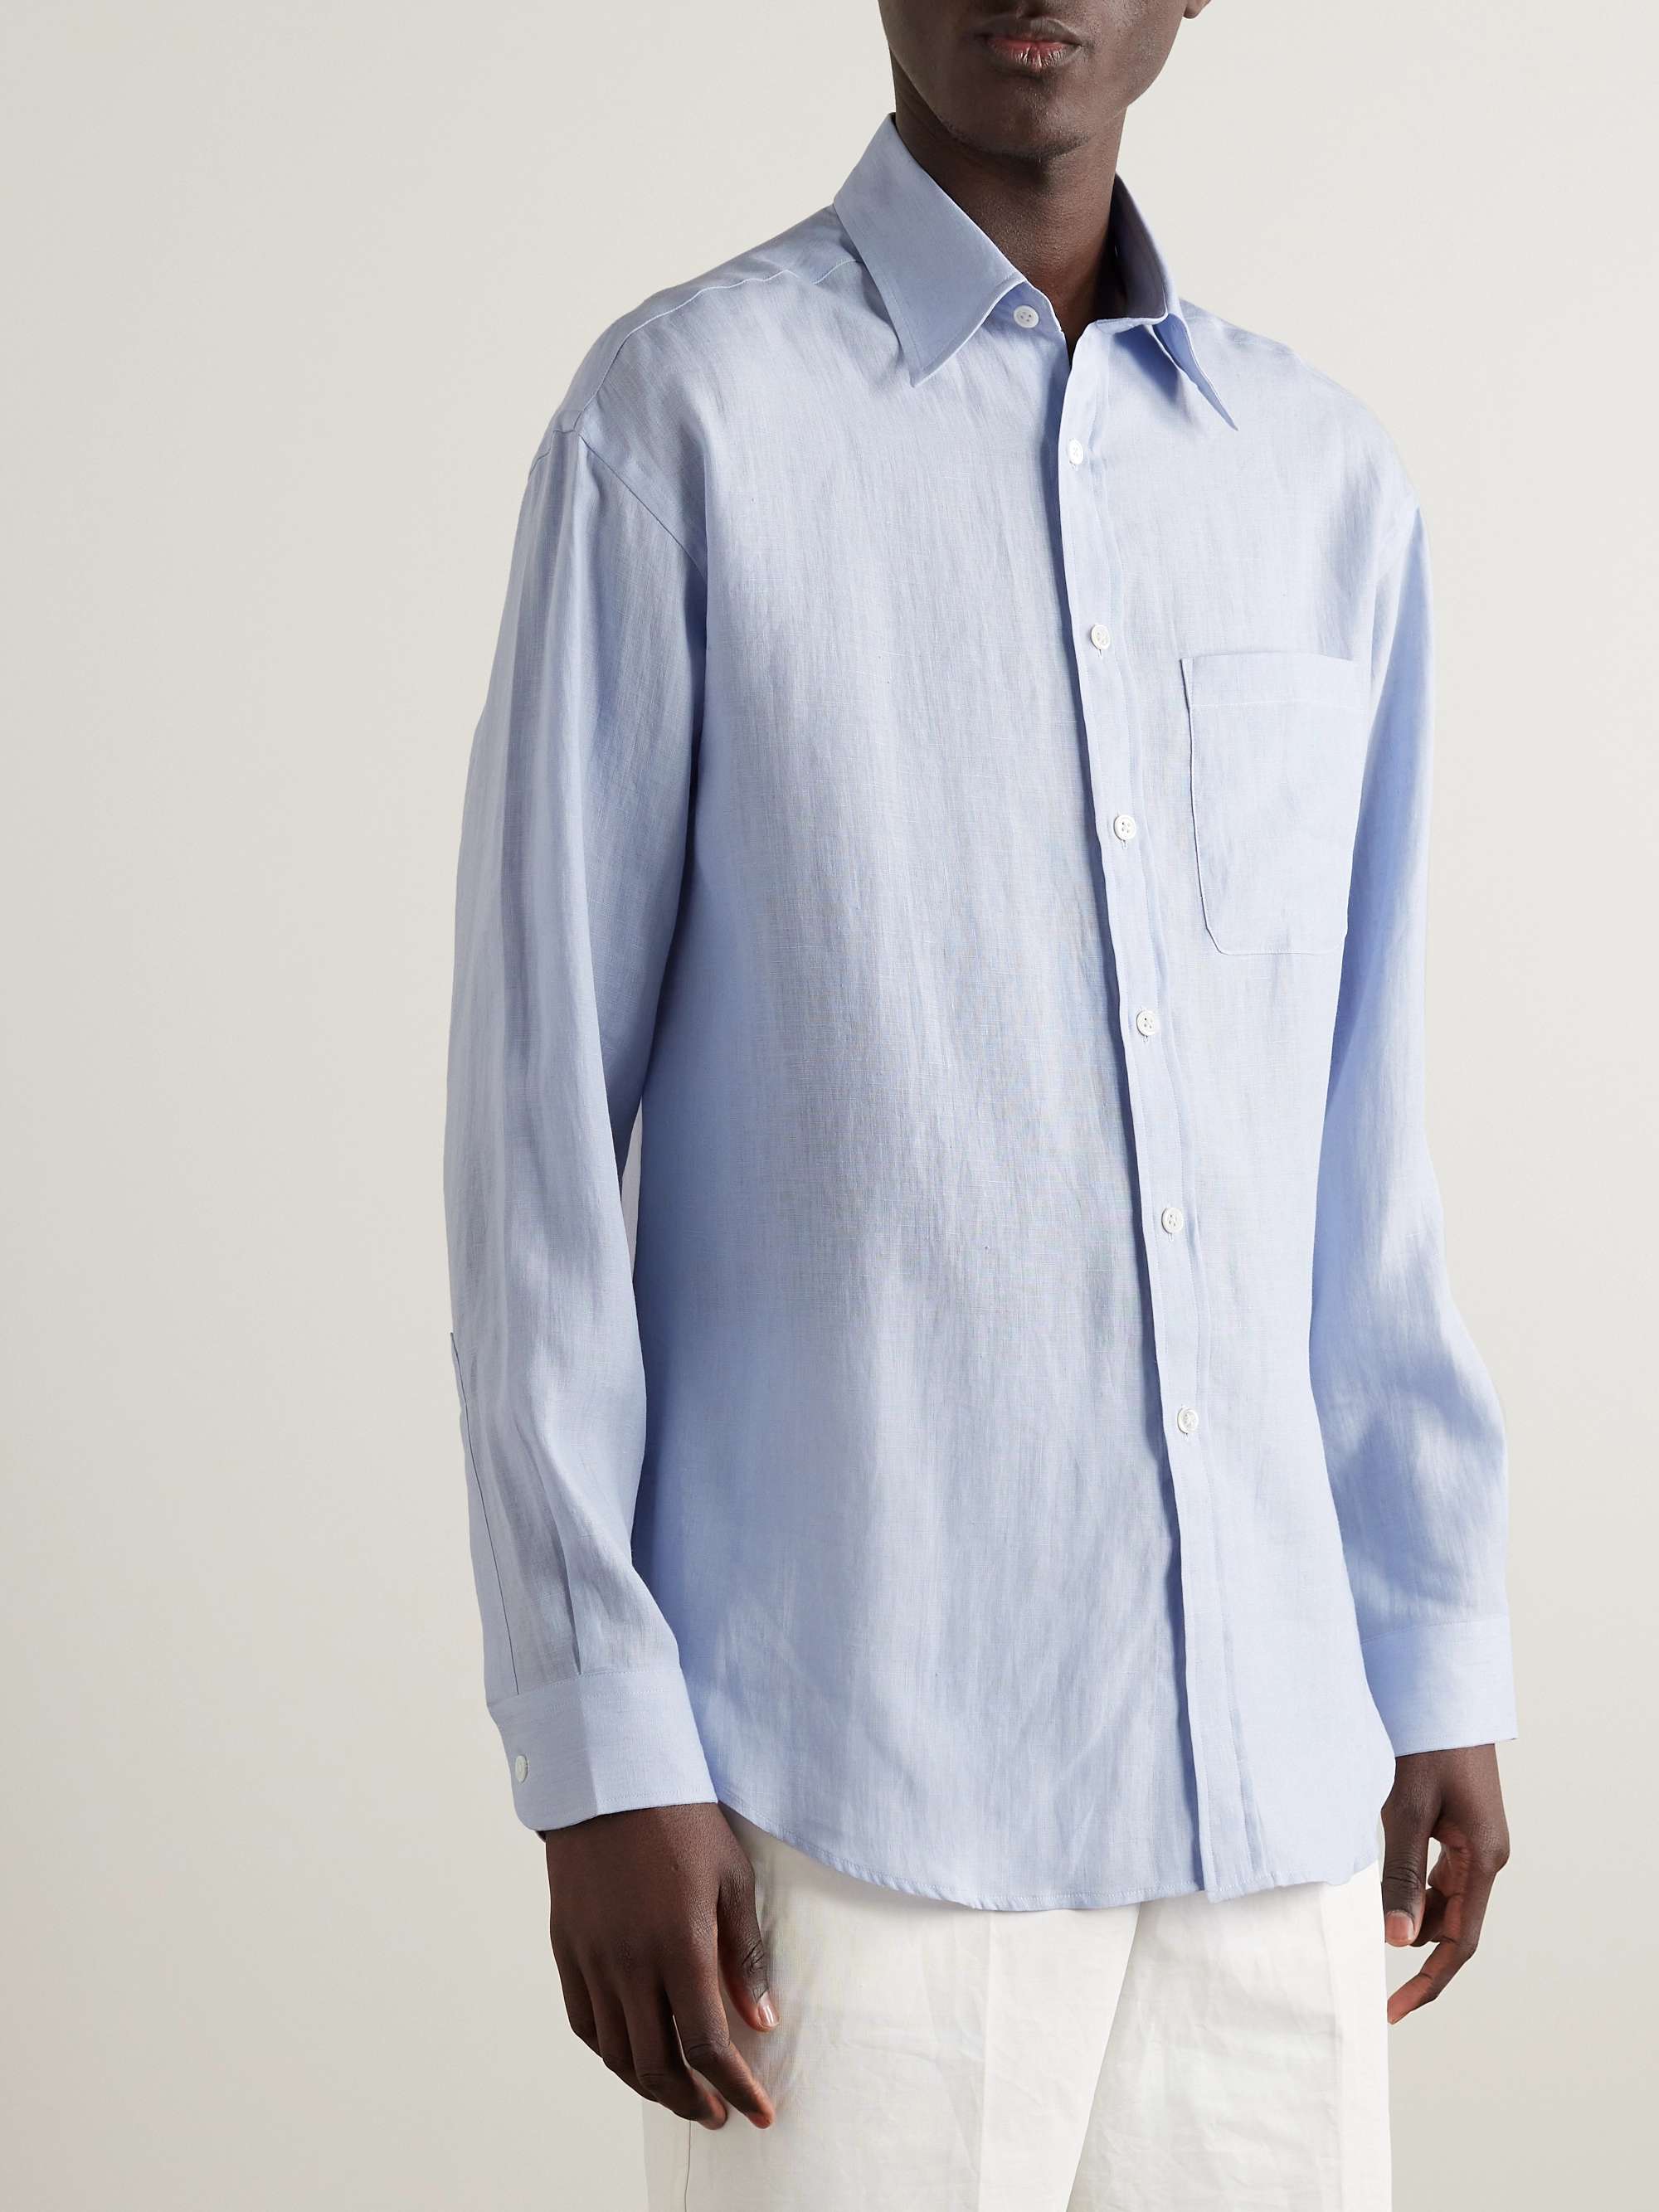 ANDERSON & SHEPPARD Linen Shirt for Men | MR PORTER